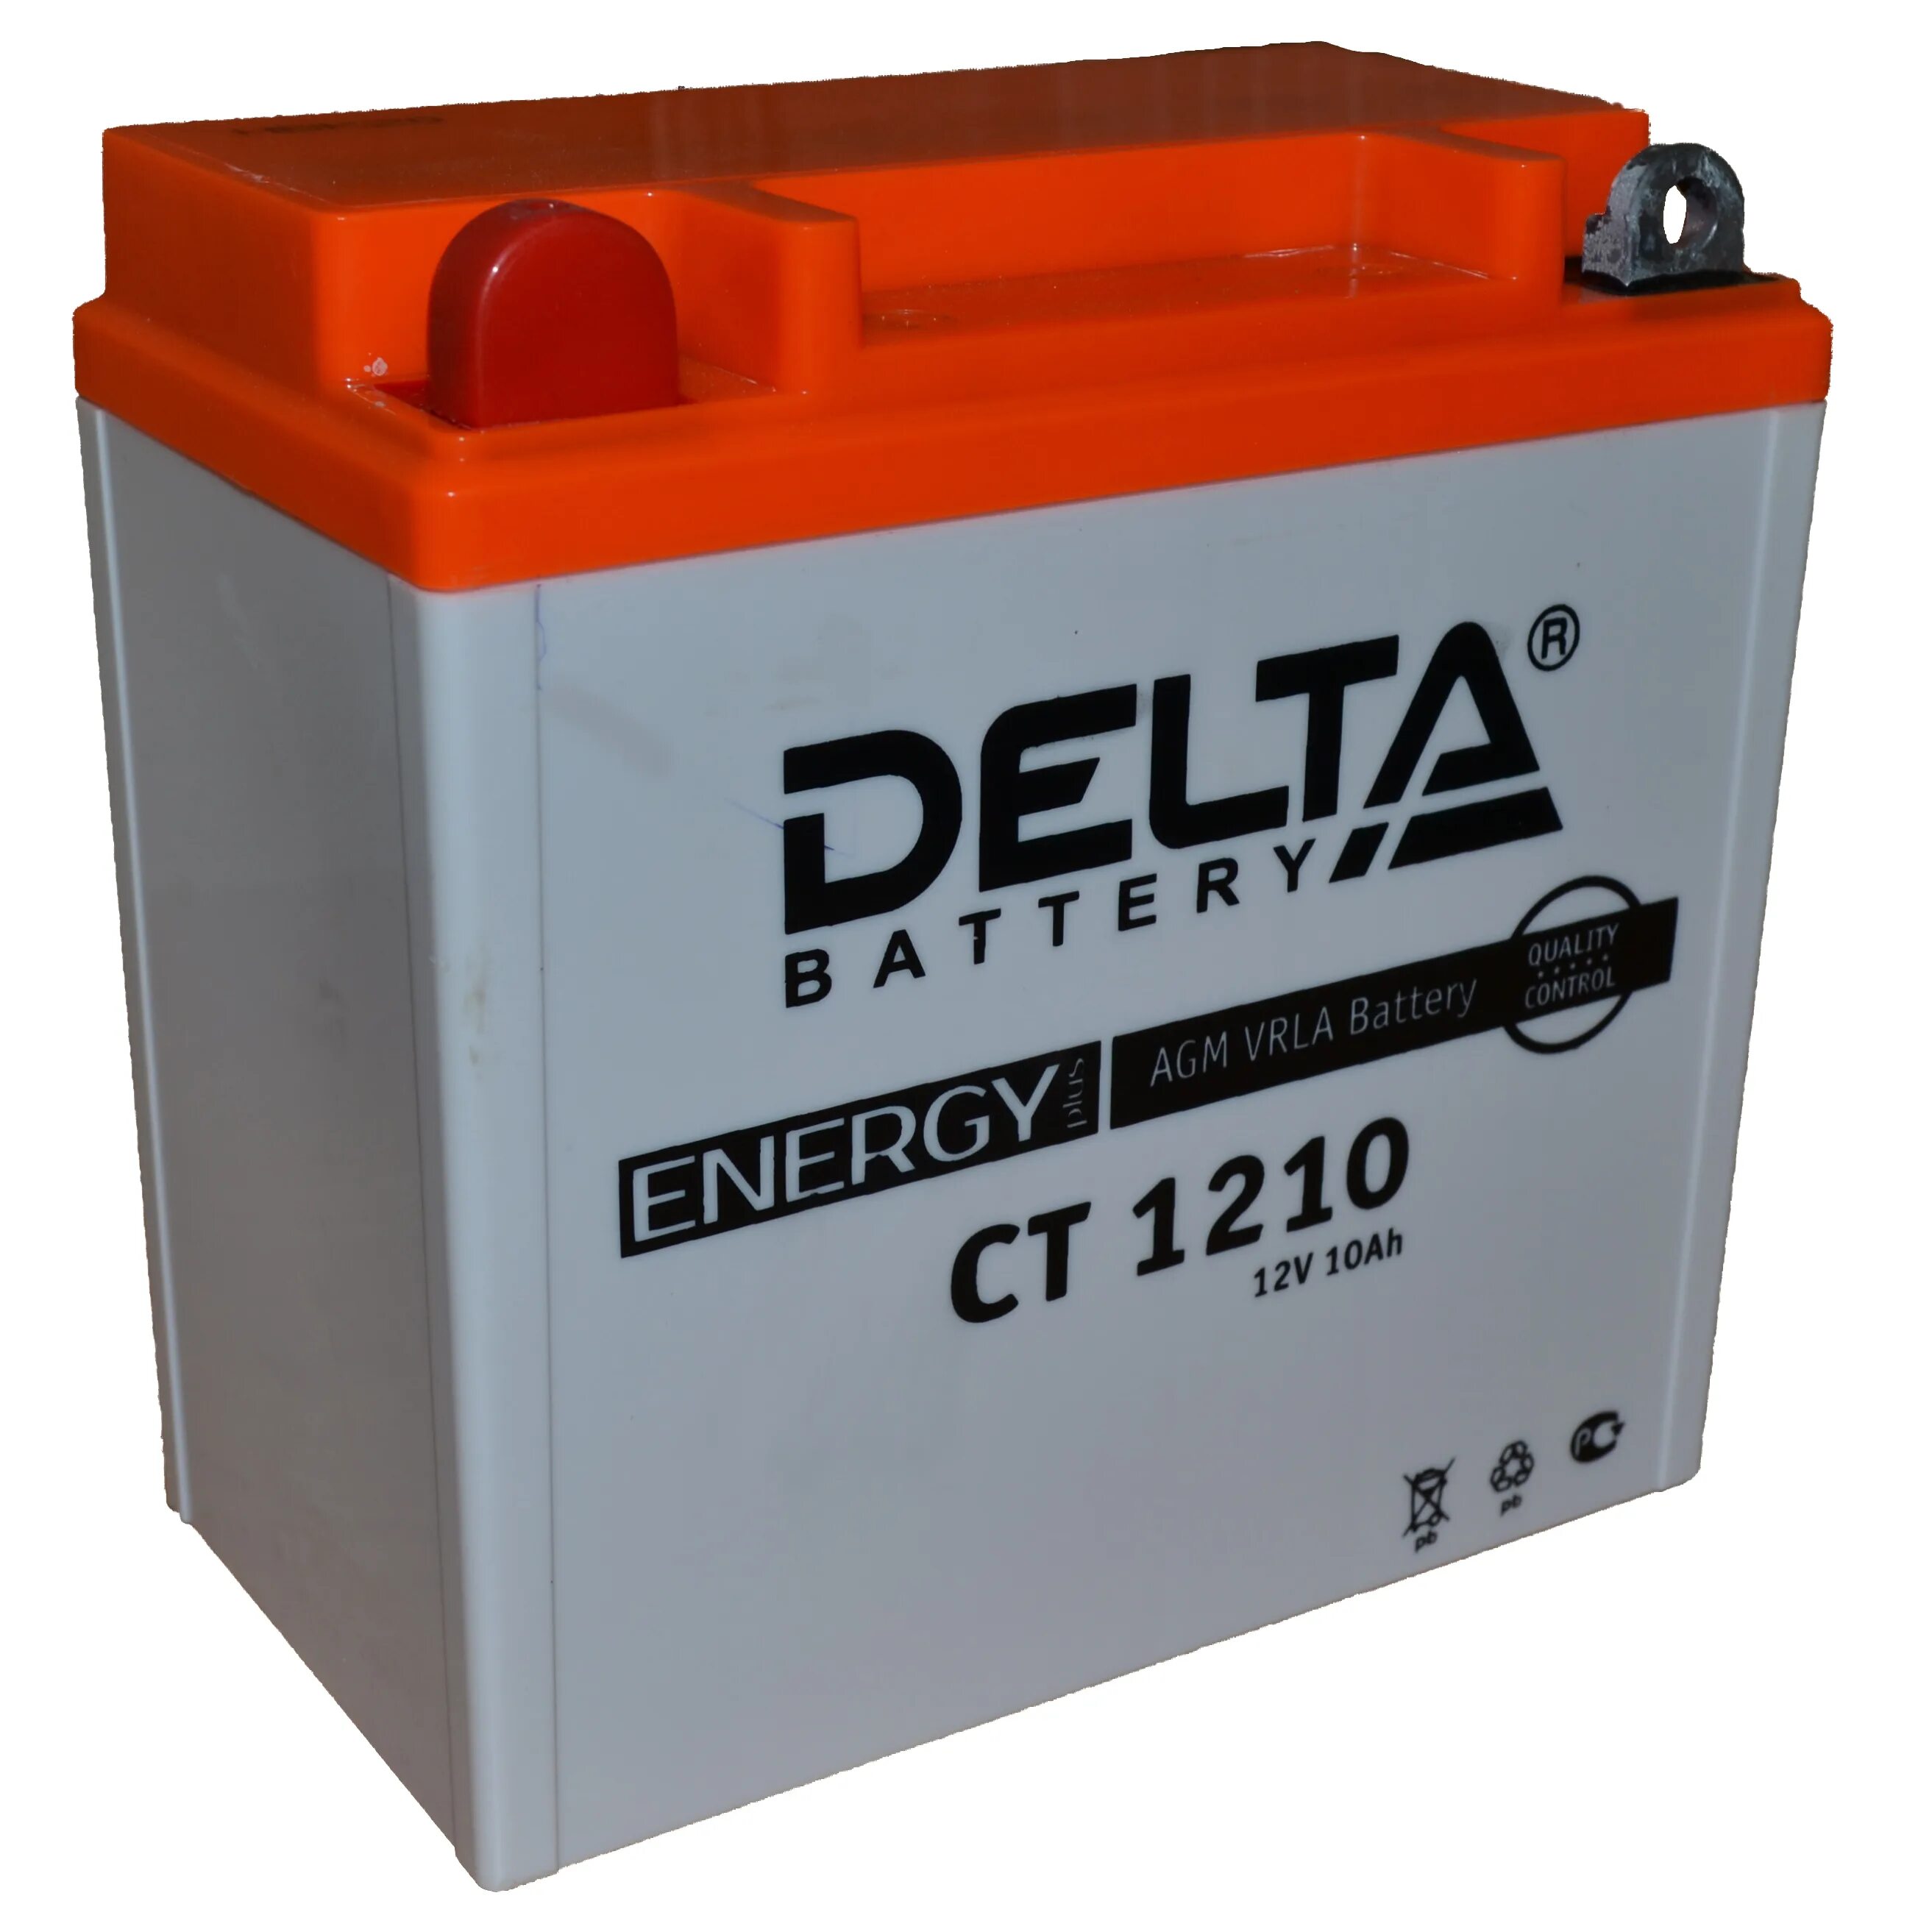 10 ампер час. Аккумулятор Delta CT 1212. Delta CT 12/10 аккумуляторная батарея. Аккумулятор Delta 1210.1 12v AGM. Delta ct1210 аккумулятор мото.